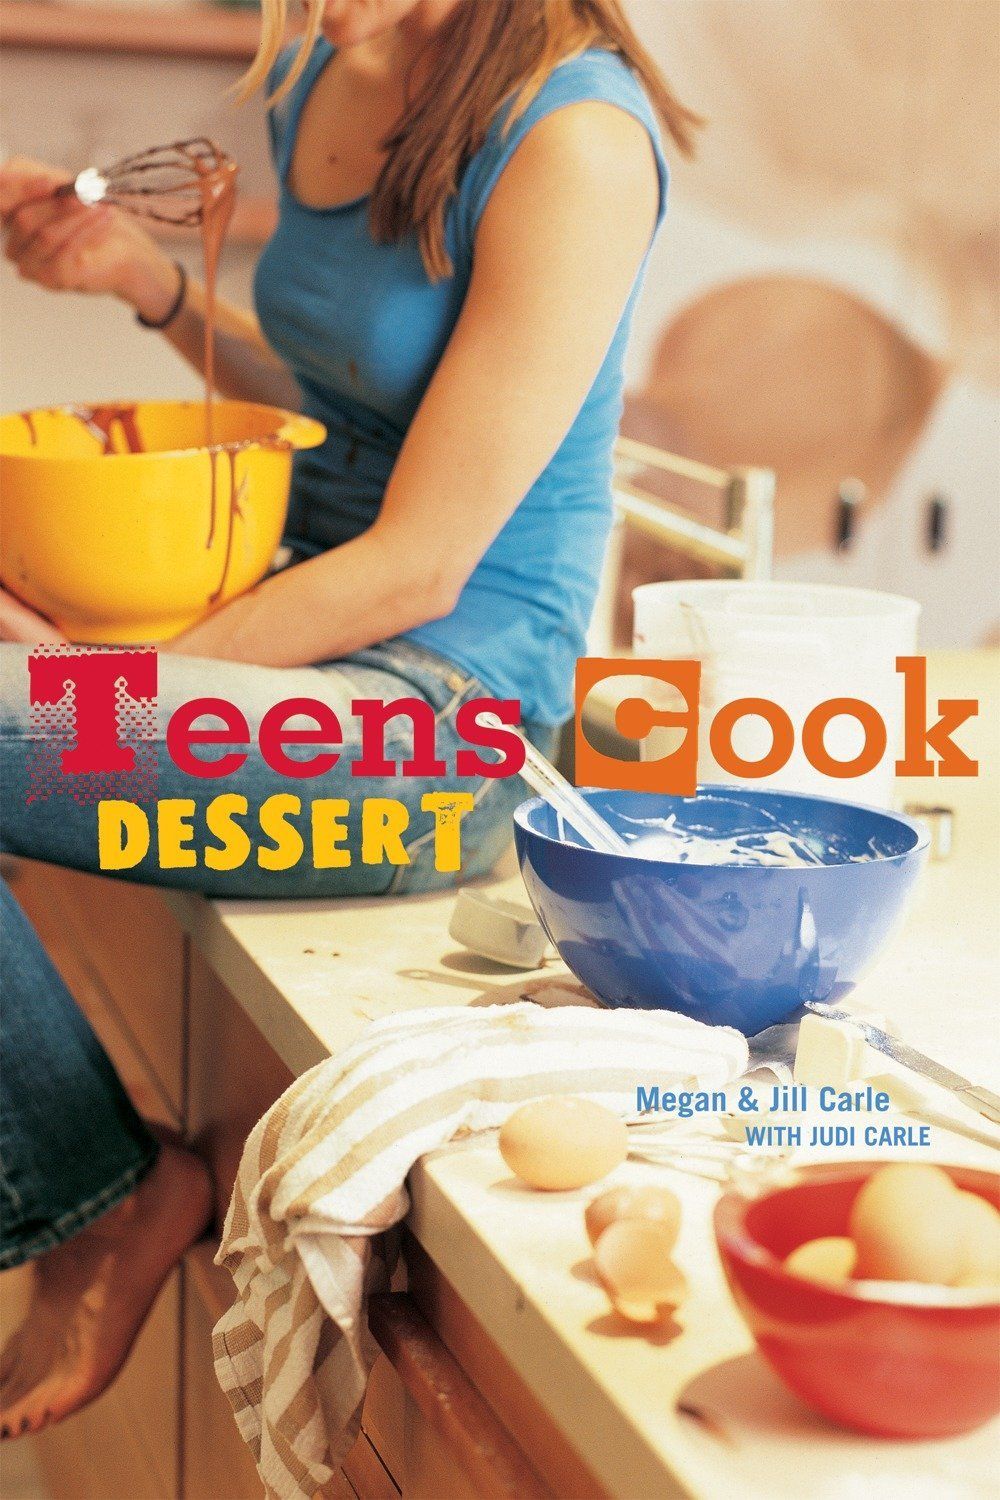 Teens Cook Dessert Recipe Cookbook cover